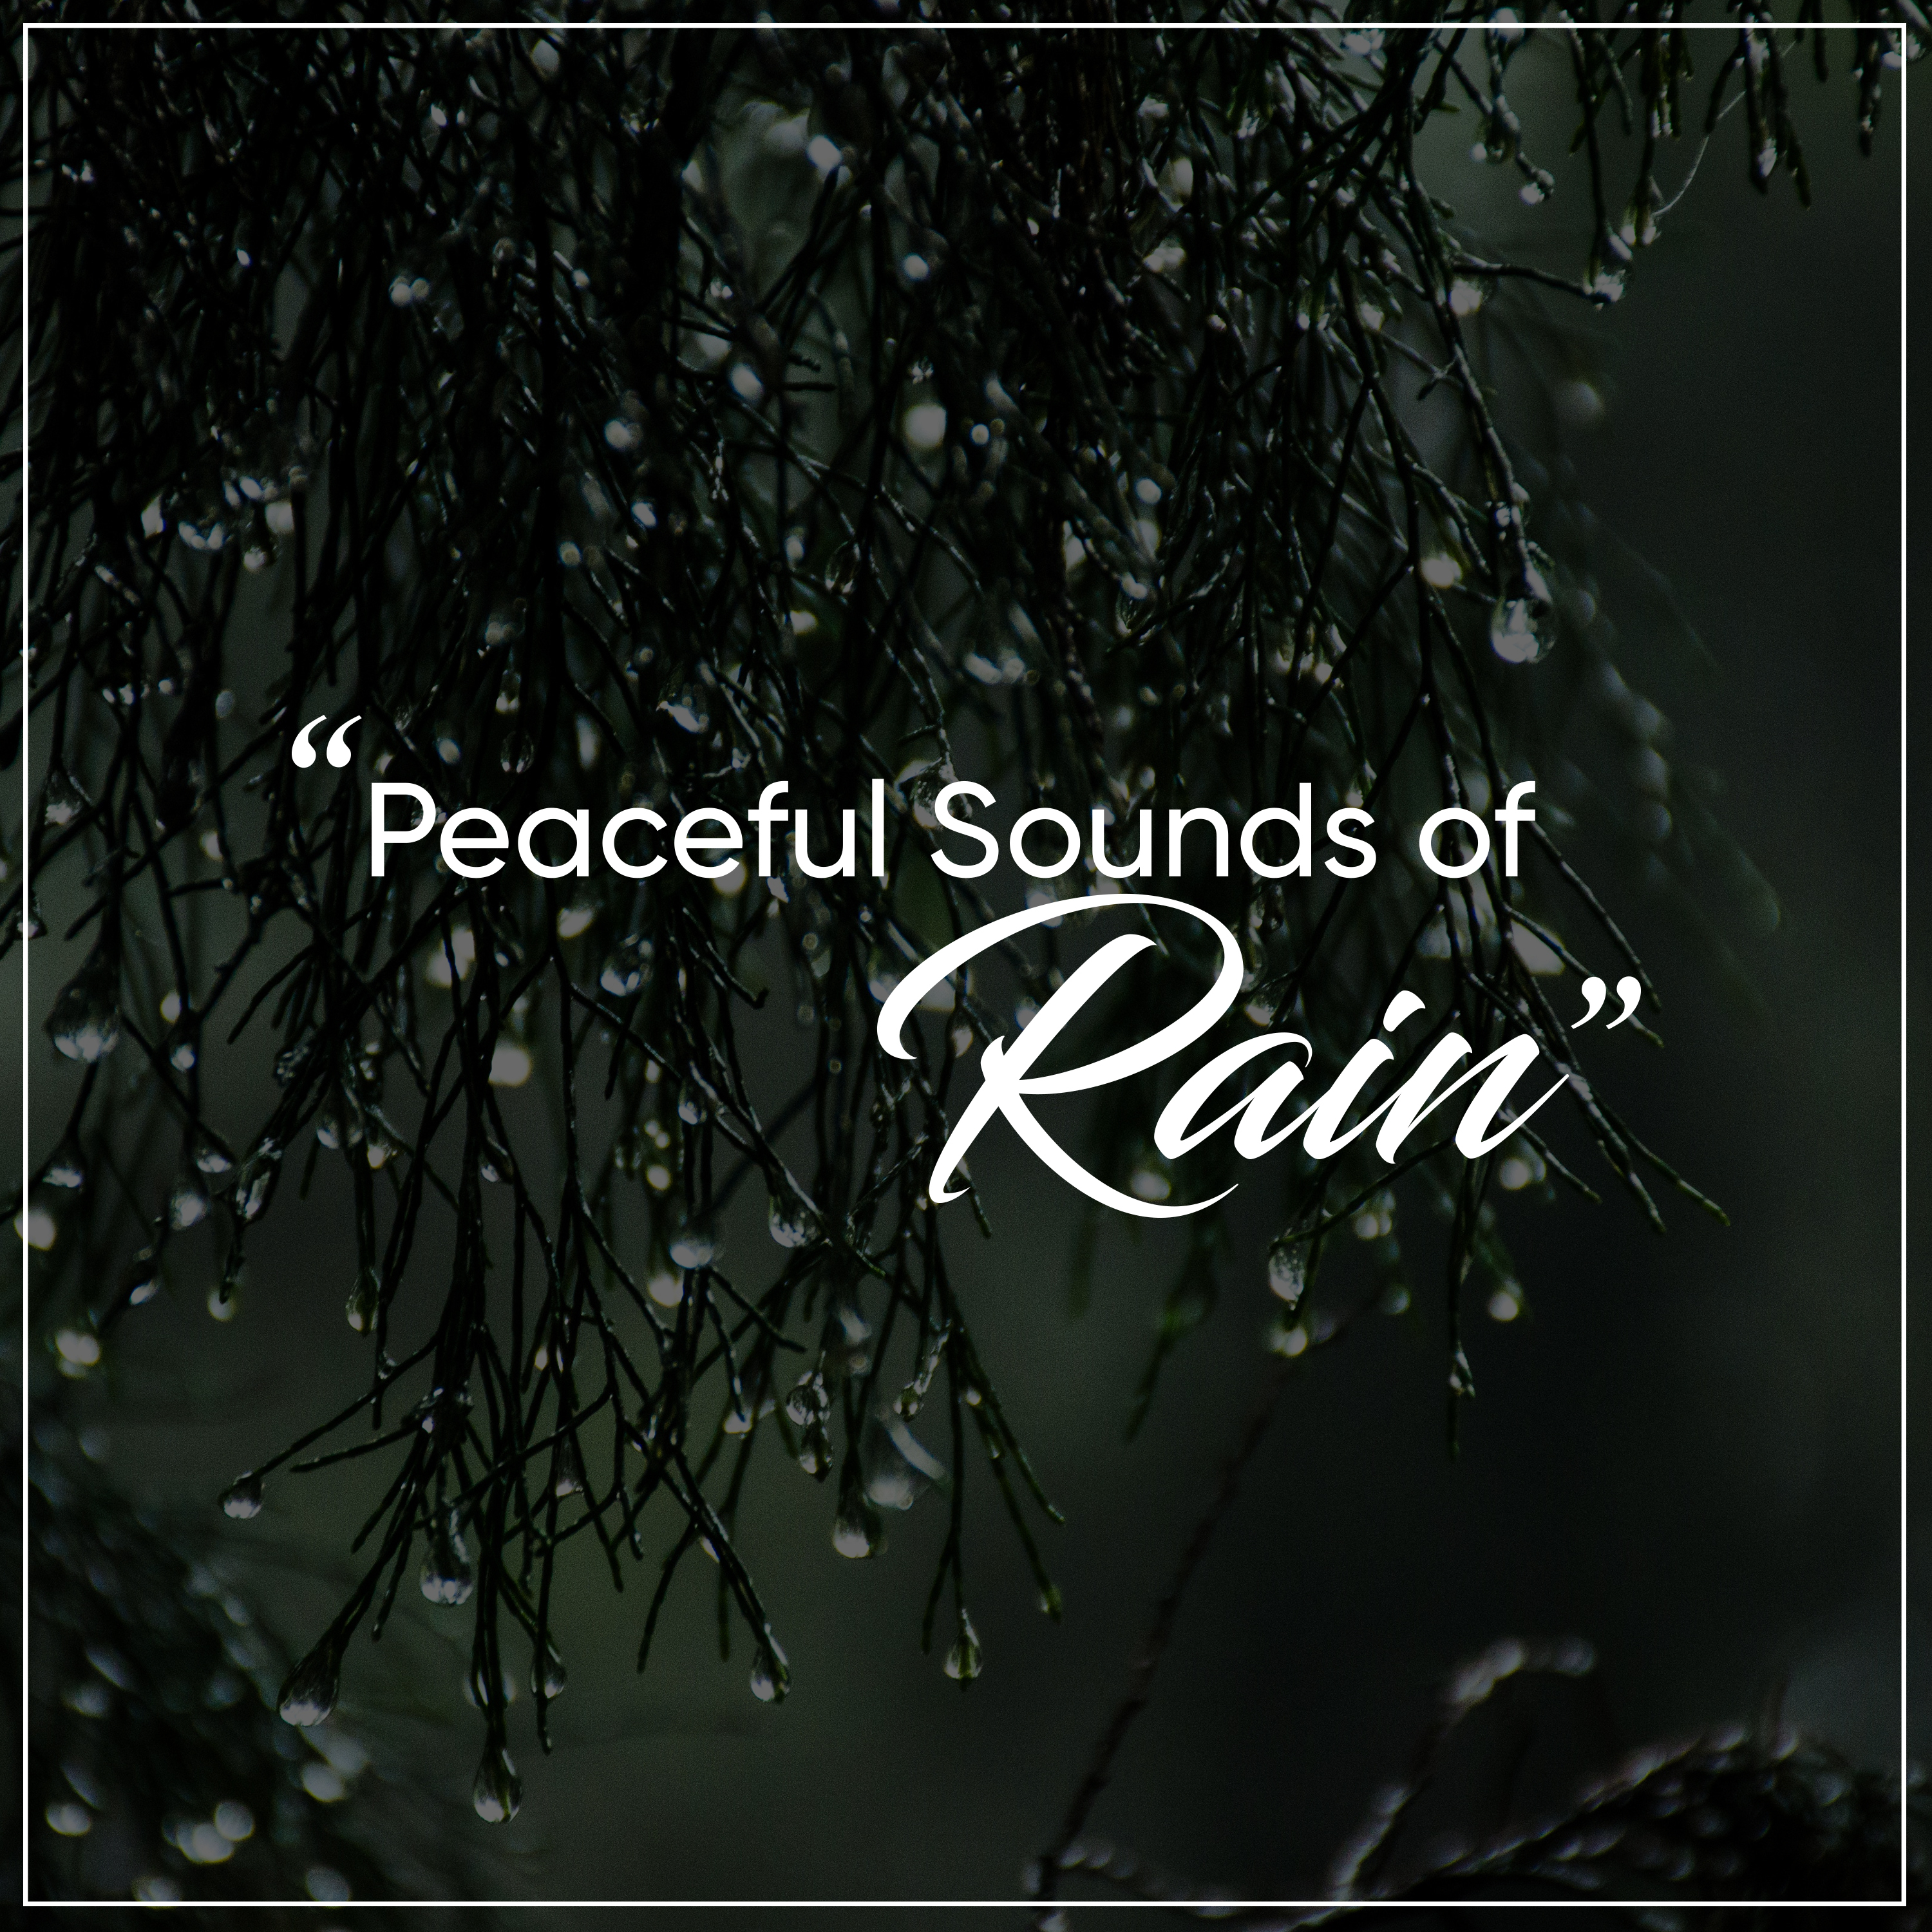 18 Sounds of Rainfall for Deep Sleep and Relaxation